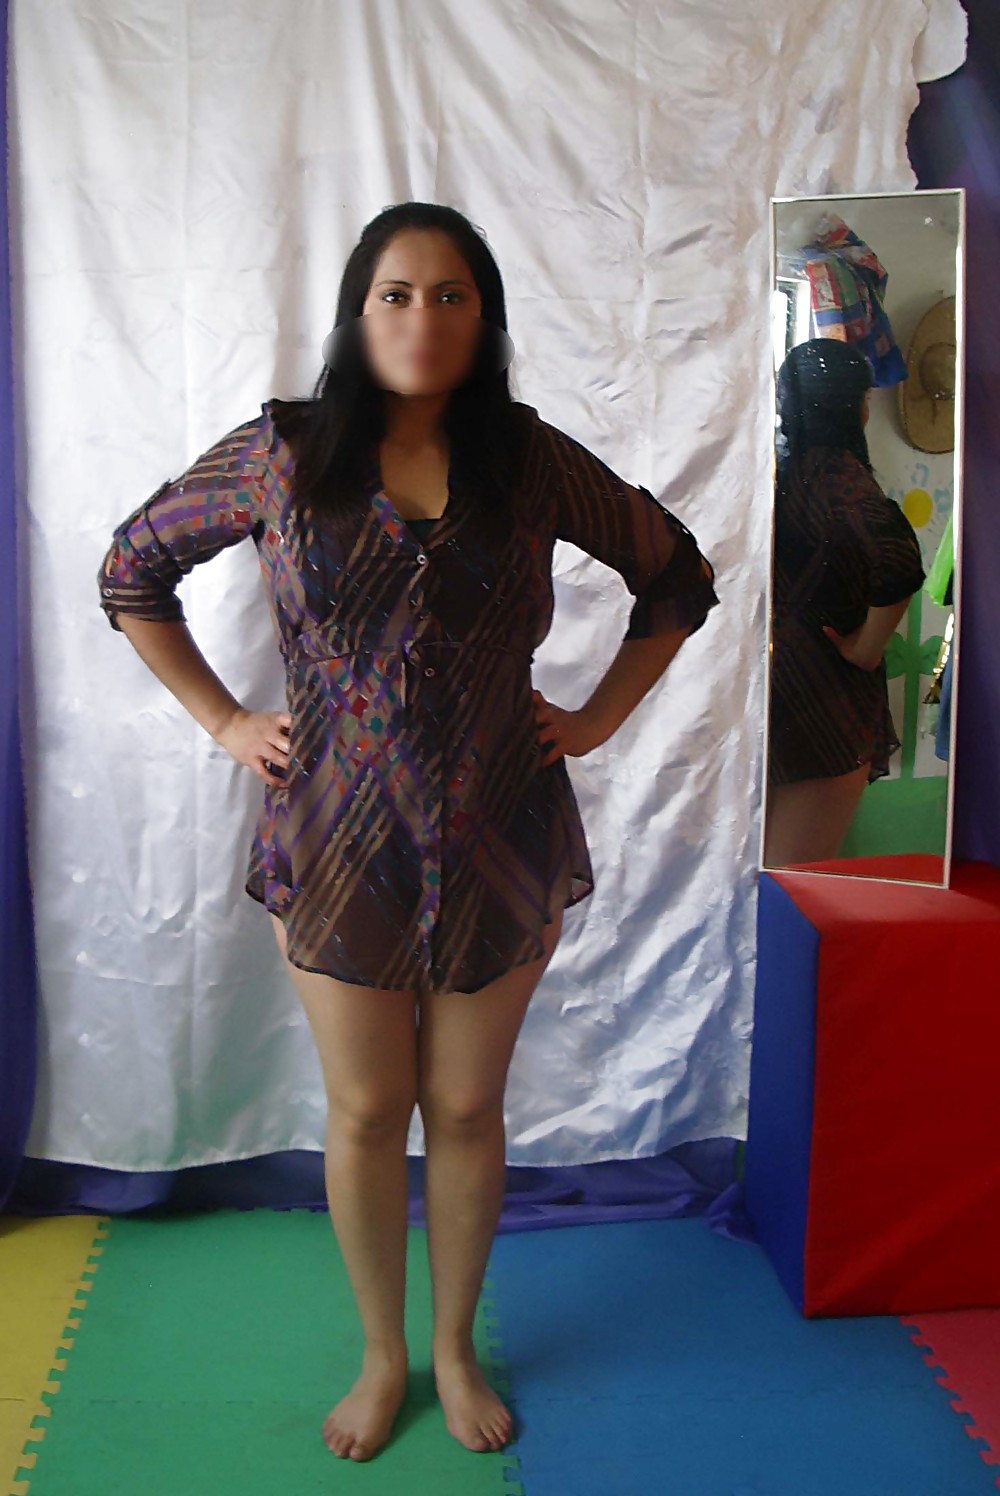 Amateur latina models her bra and panty #24599236